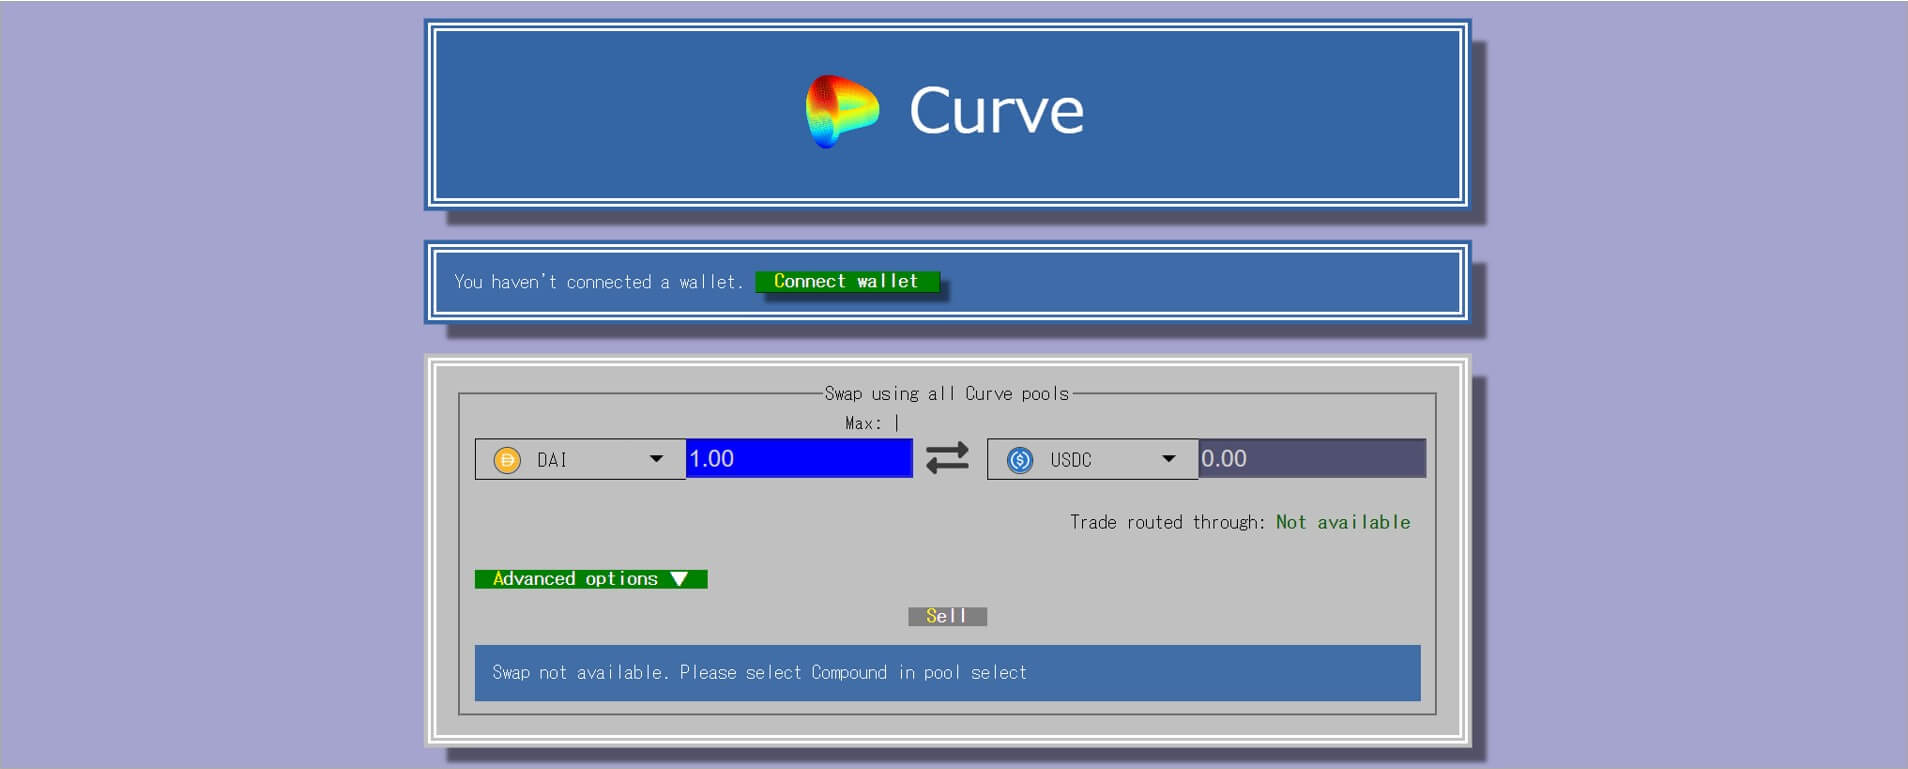 ③：Curve Finance